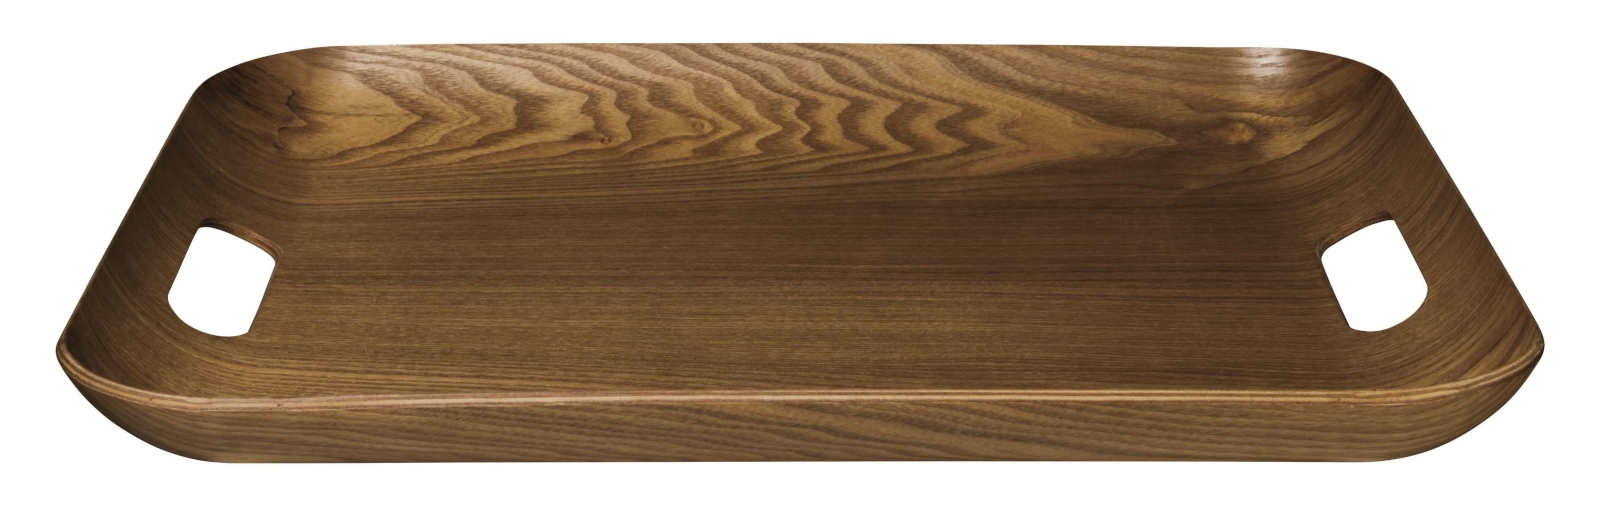 ASA Holztablett rechteckig wood 45 x 36 cm